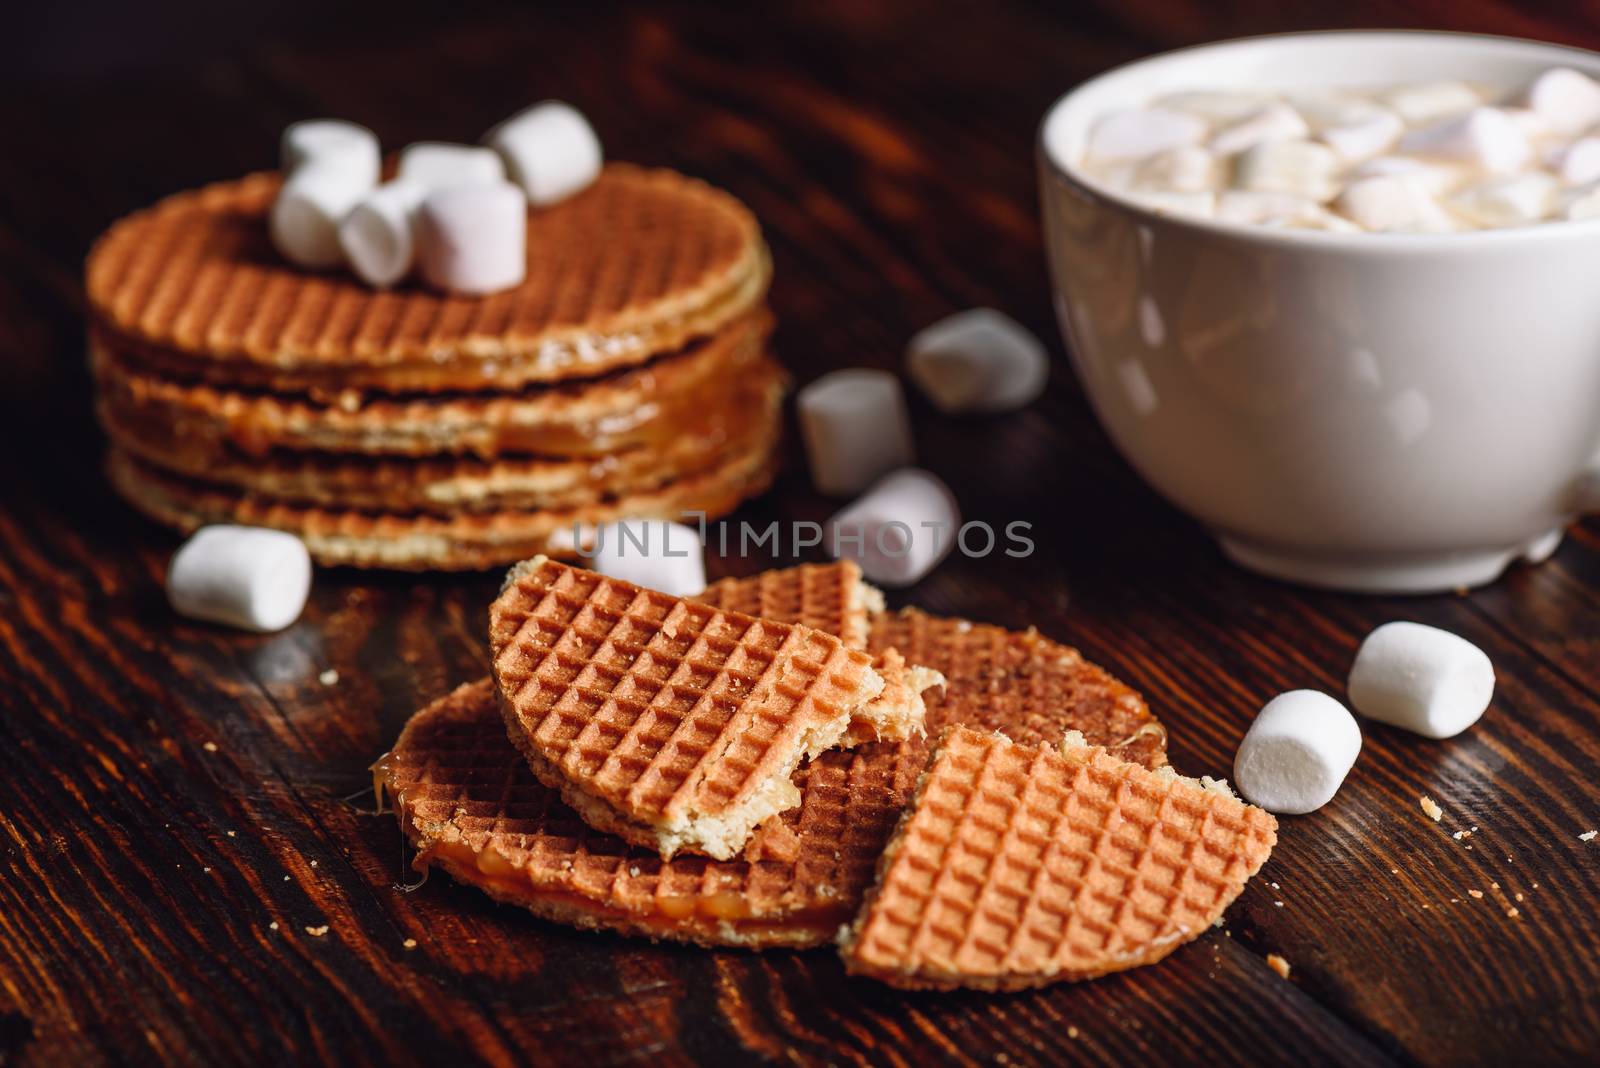 Waffles and Hot Cocoa with Marshmallow. by Seva_blsv